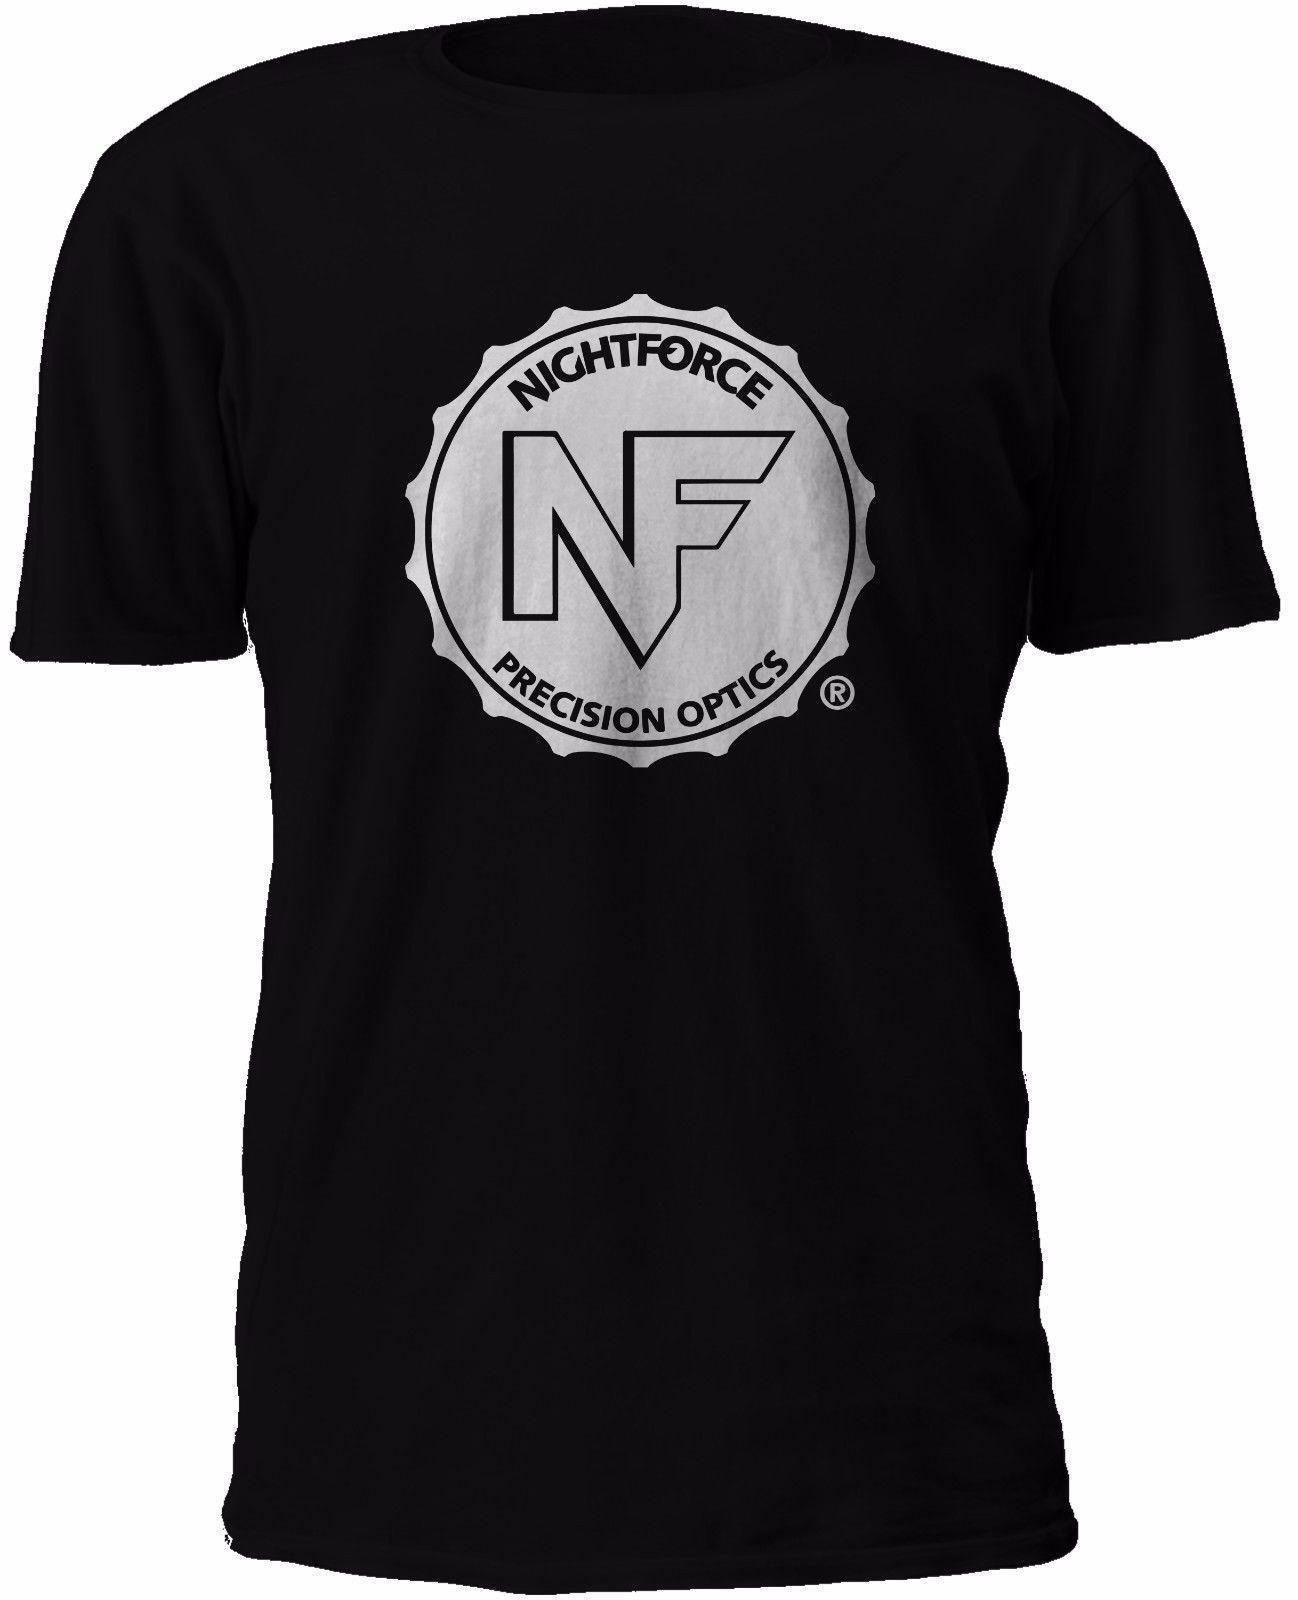 Nightforce Logo - new Nightforce Rifle Scope Logo T Shirt Funny free shipping Unisex Casual  top